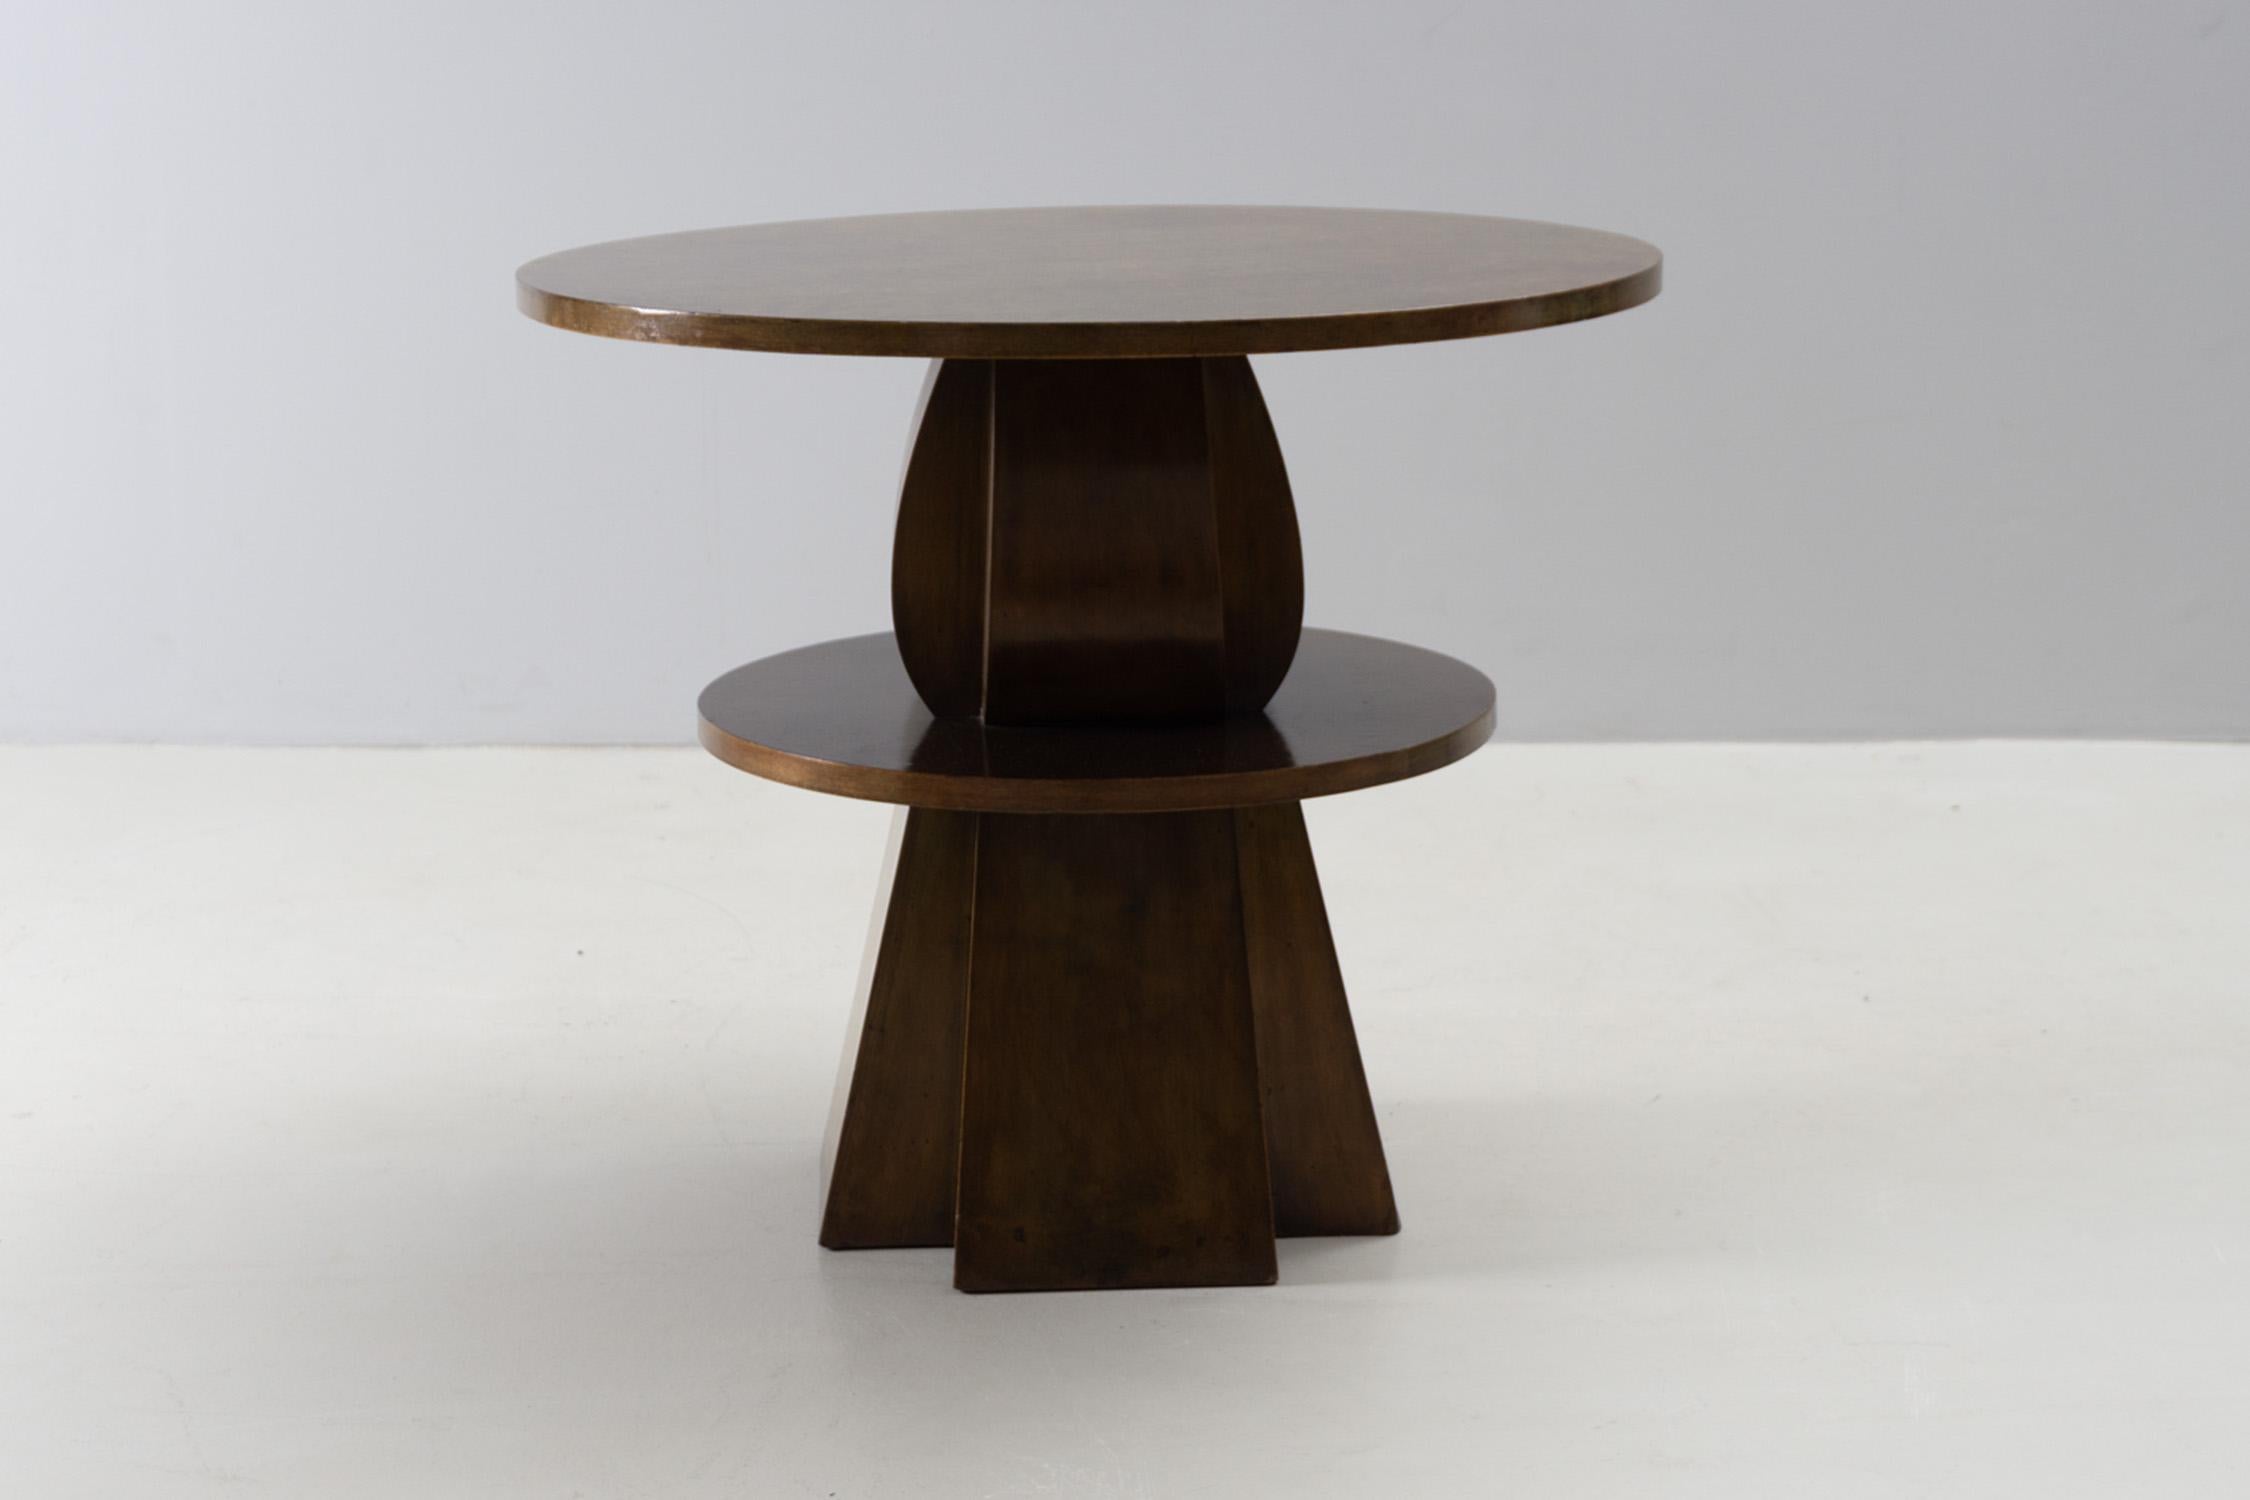 Italian Walnut and Birdseye Maple, Round Side Table, Giacomo Cometti, 1928